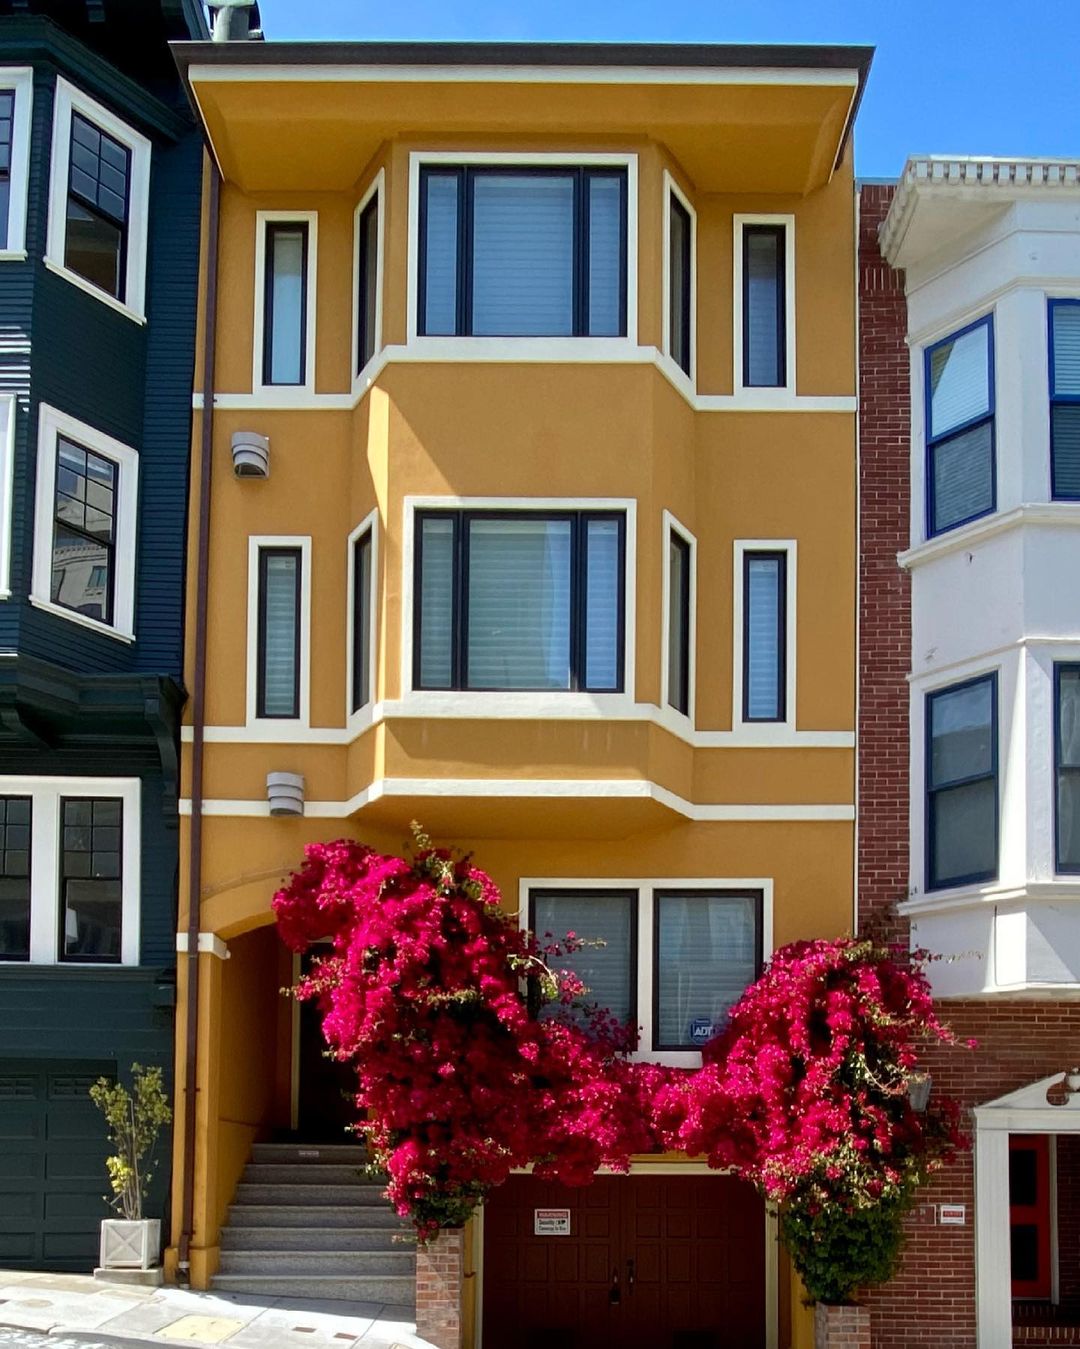 Modern Victorian Style Home in Nob Hill, San Francisco. Photo by Instagram user @mikekukreja